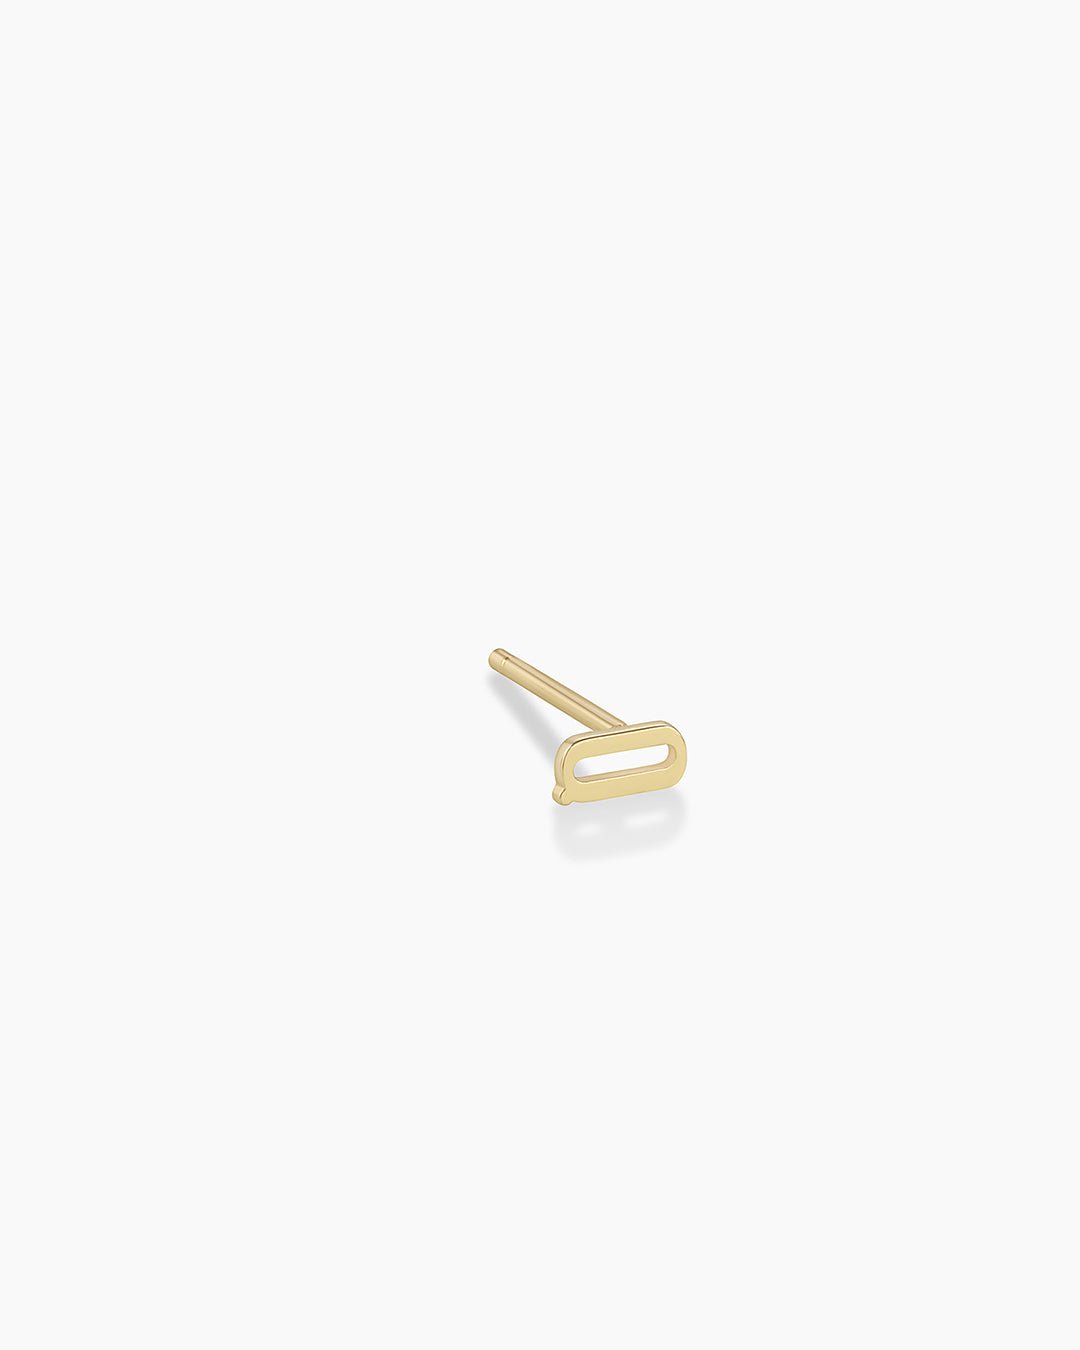 Woman wearing alphabet earring stud || option::14k Solid Gold, Q, Single